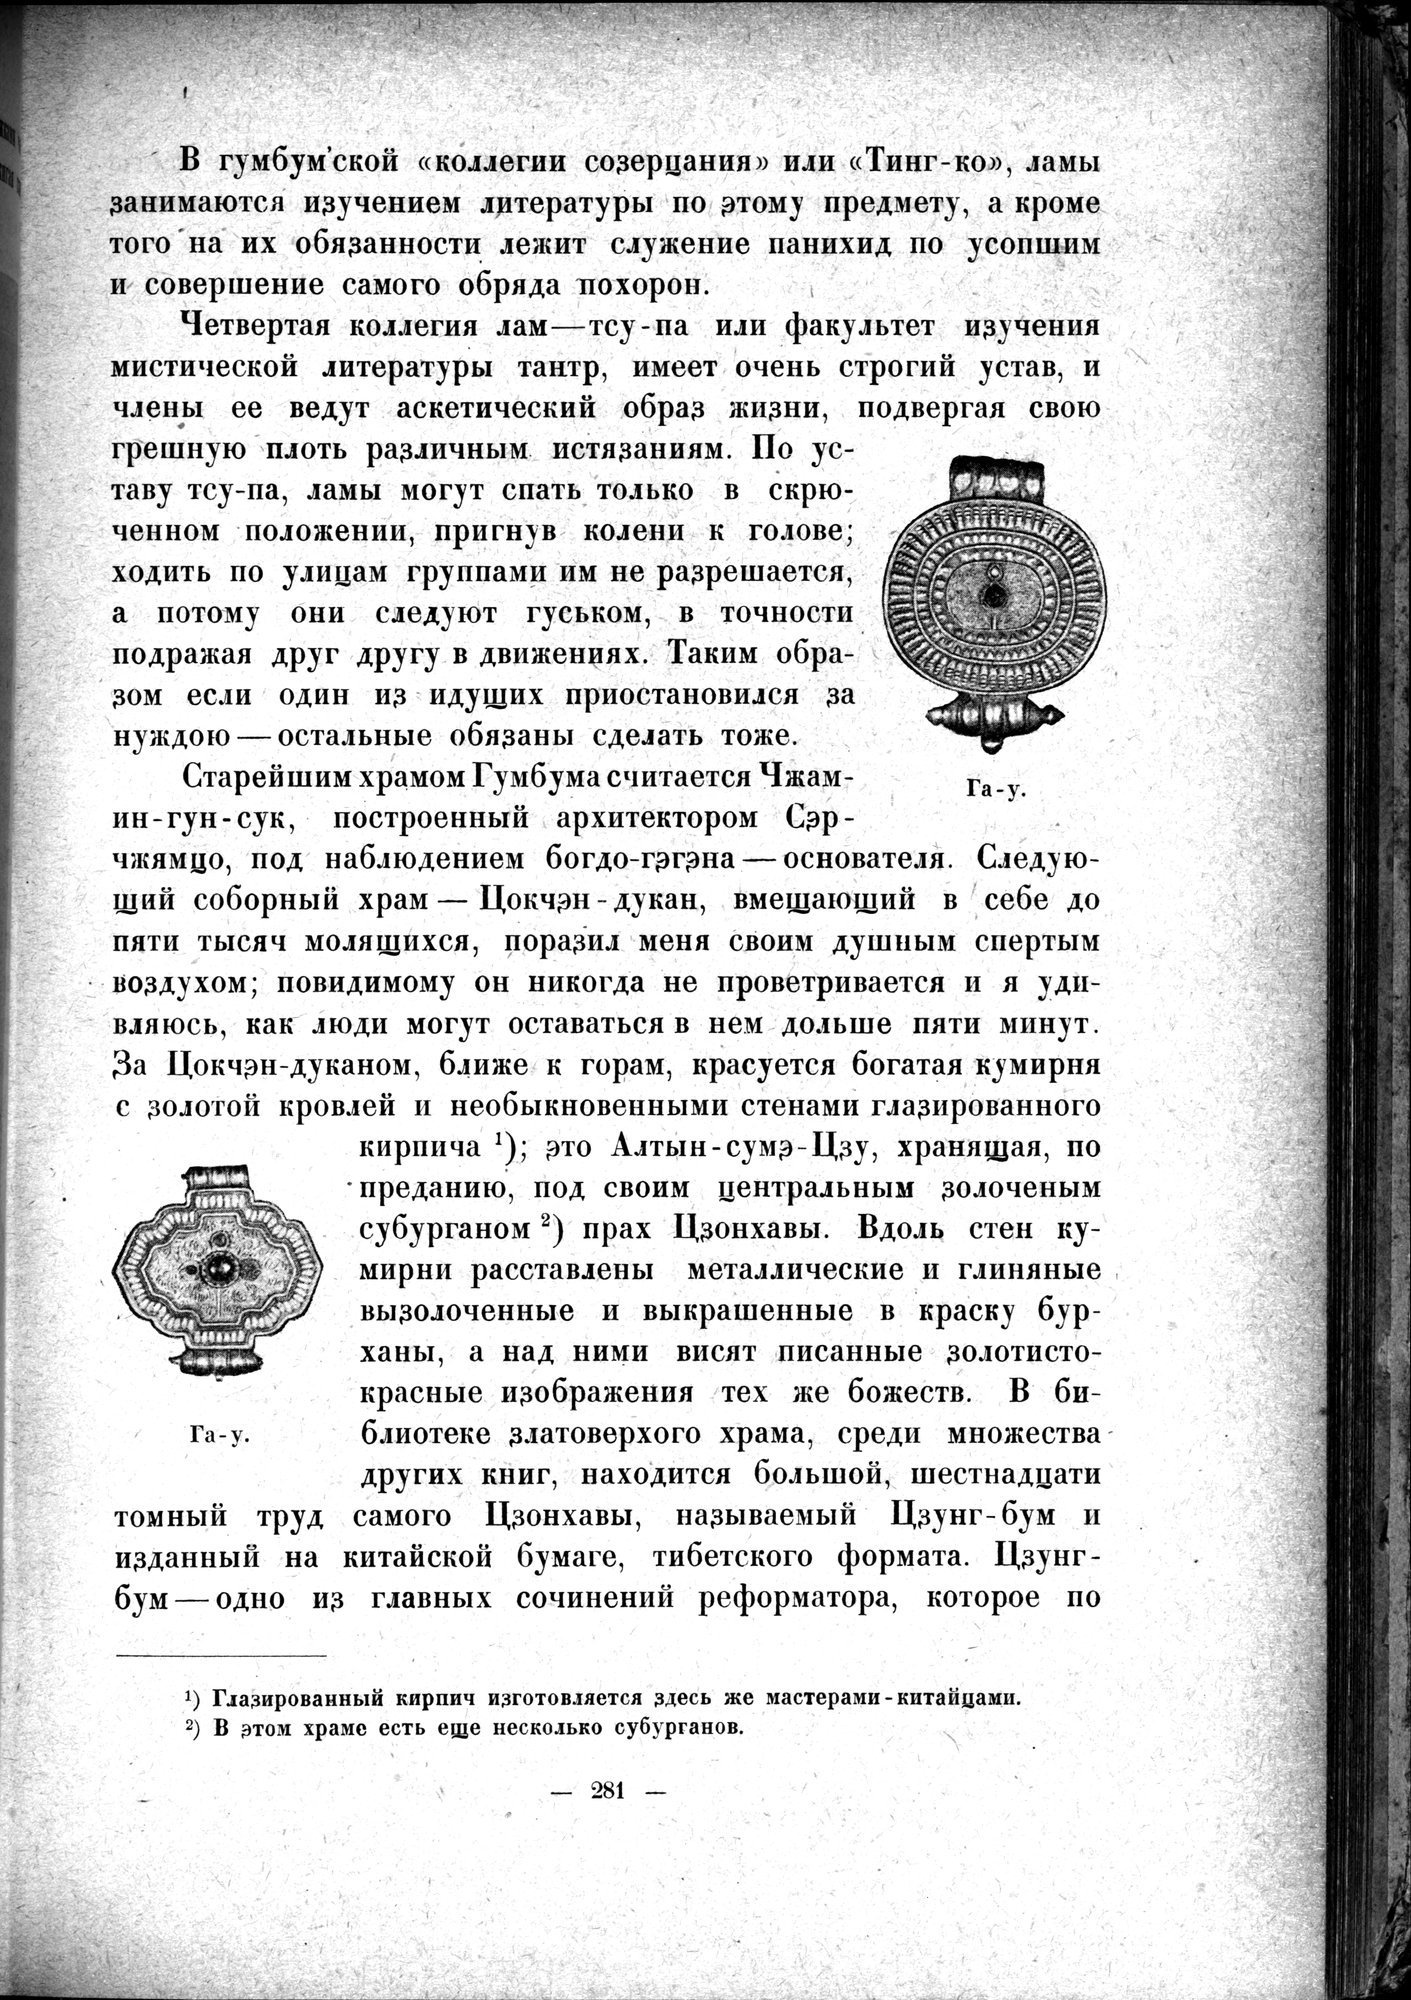 Mongoliya i Amdo i mertby gorod Khara-Khoto : vol.1 / Page 331 (Grayscale High Resolution Image)